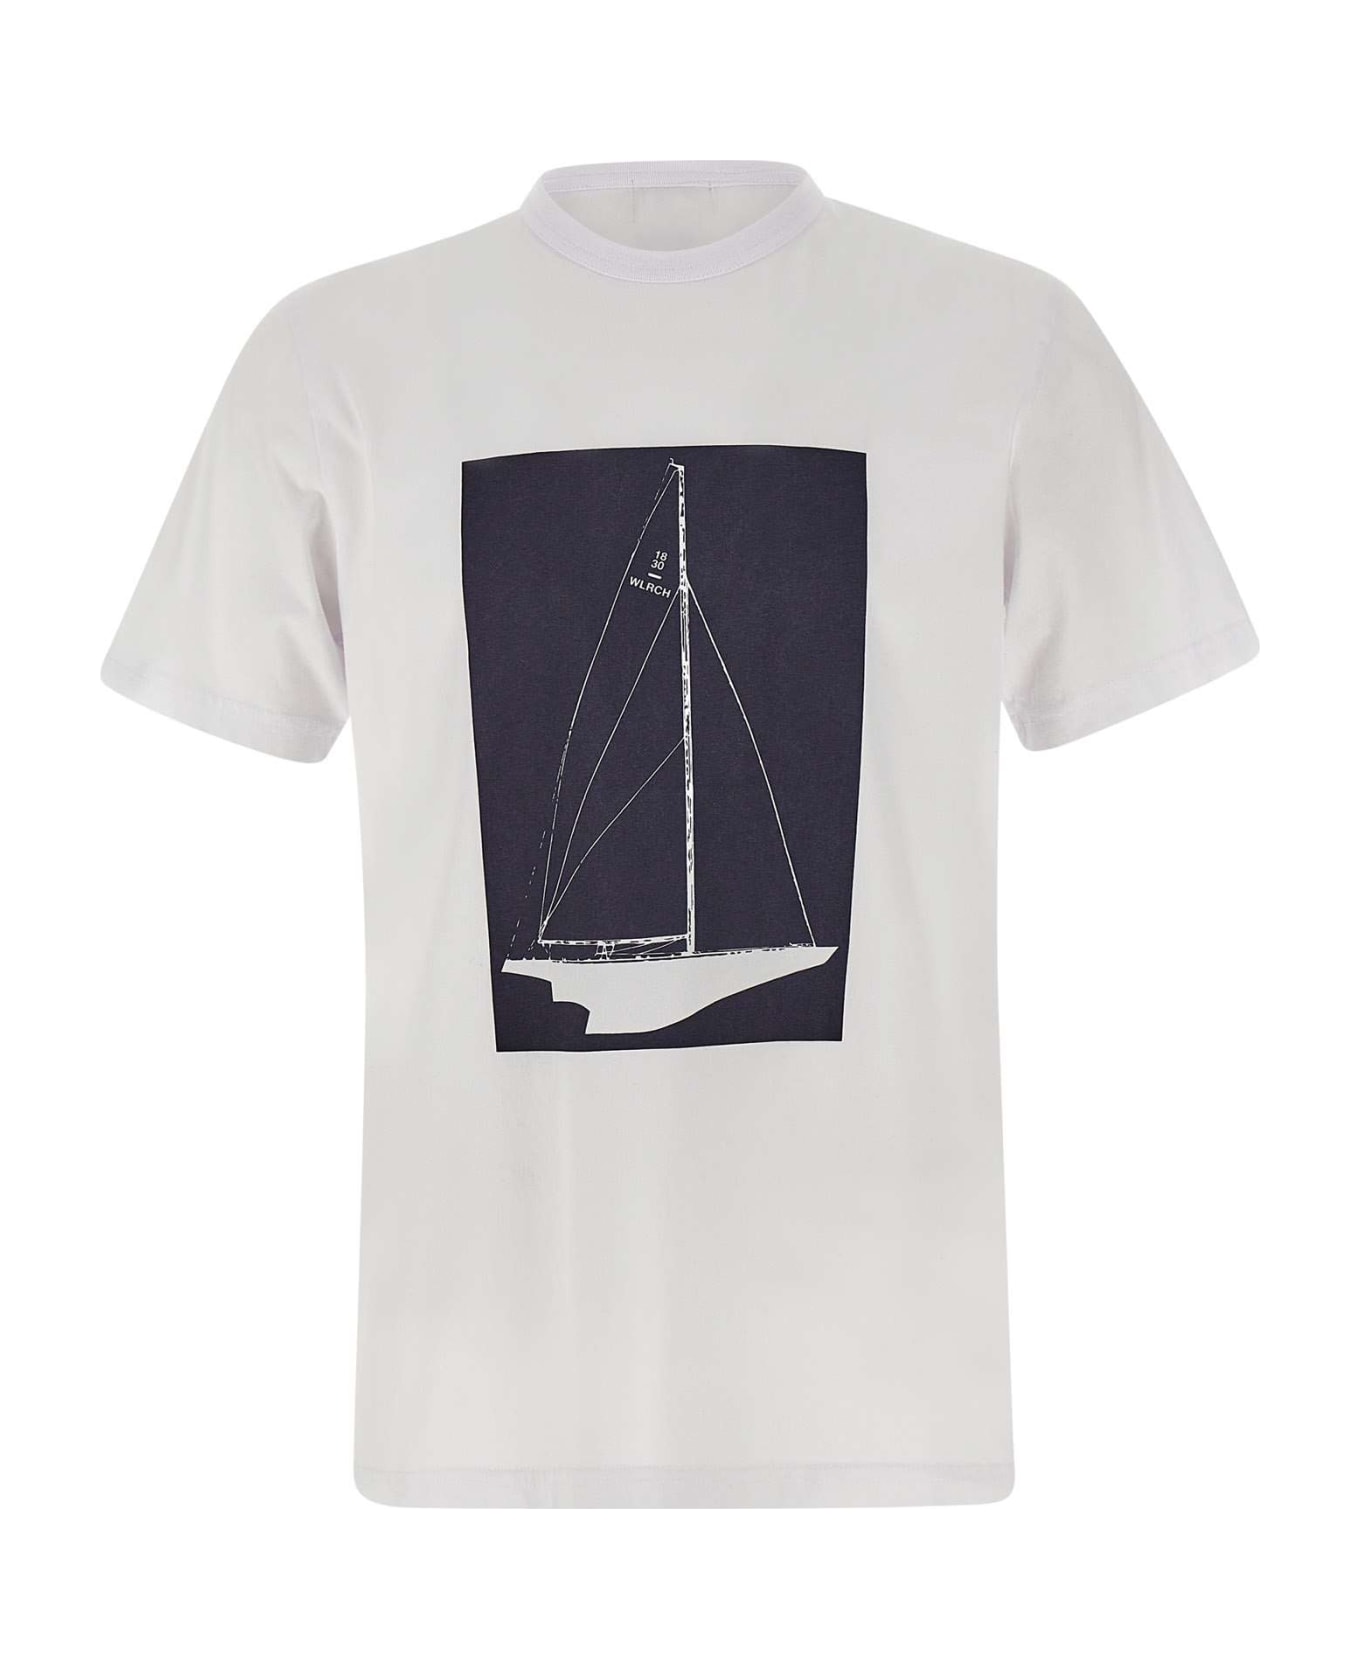 Woolrich "boat" Cotton T-shirt - WHITE シャツ